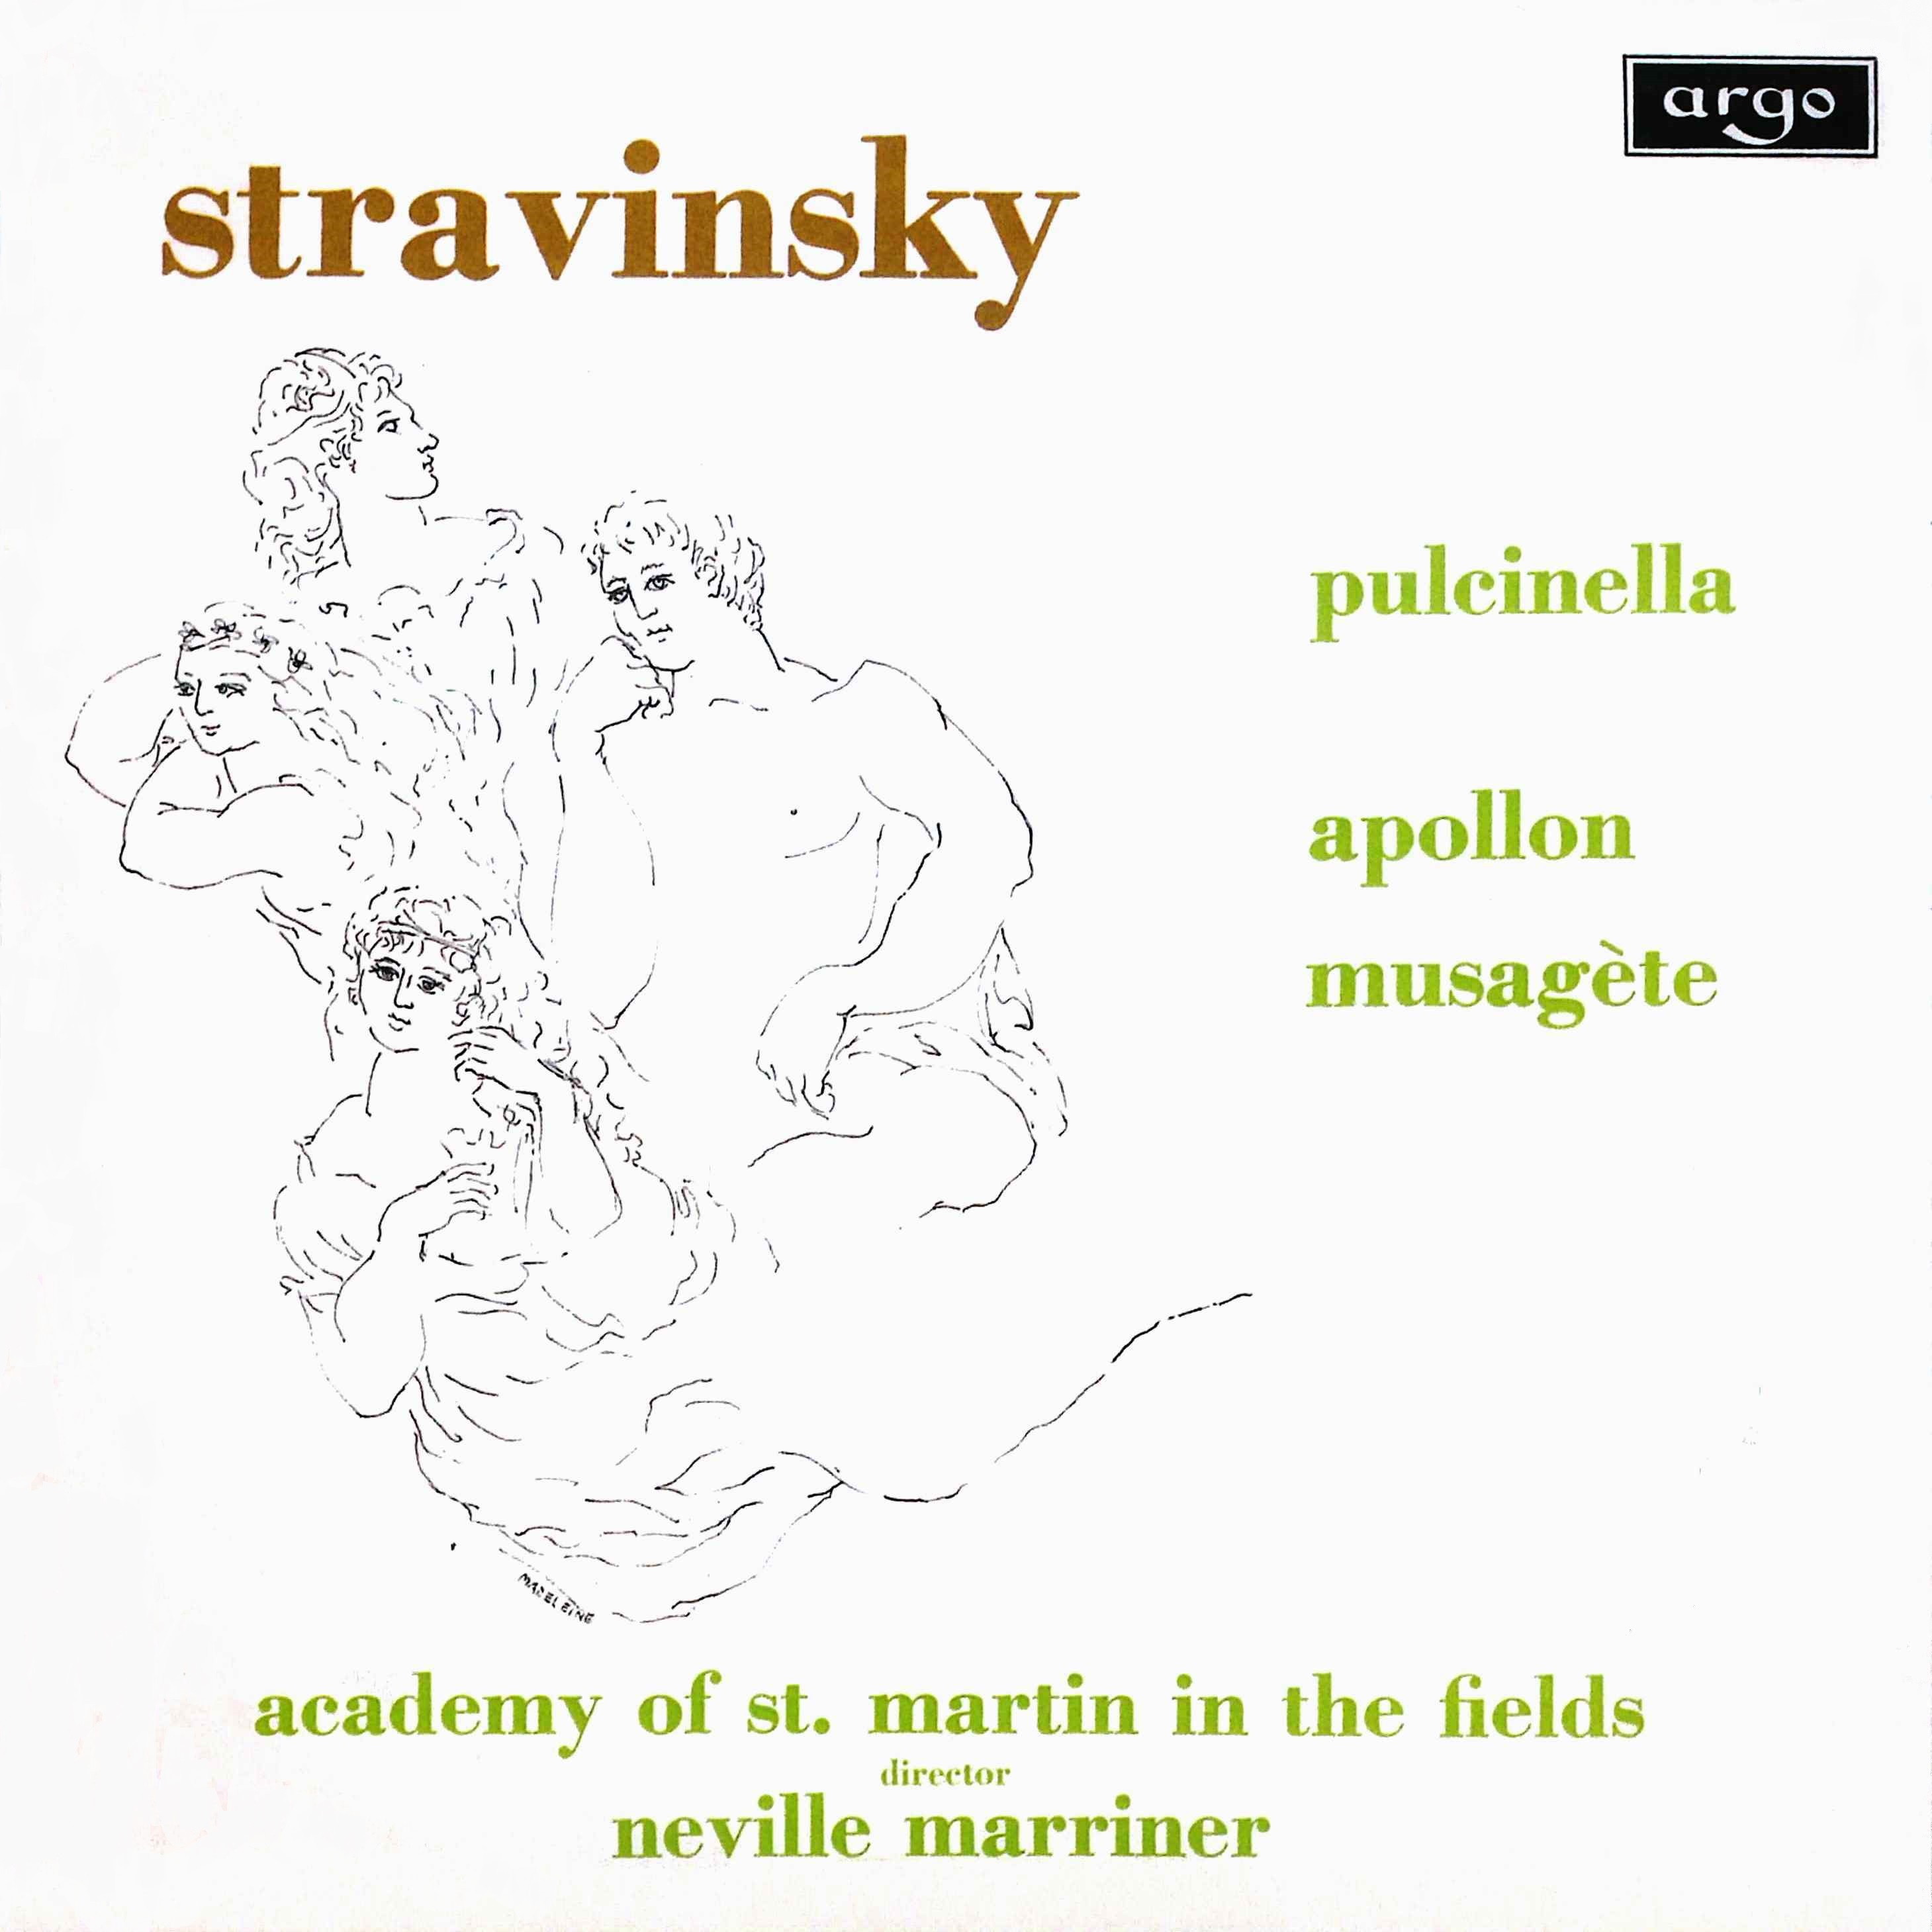 Stravinsky - Pulcinella 20180215